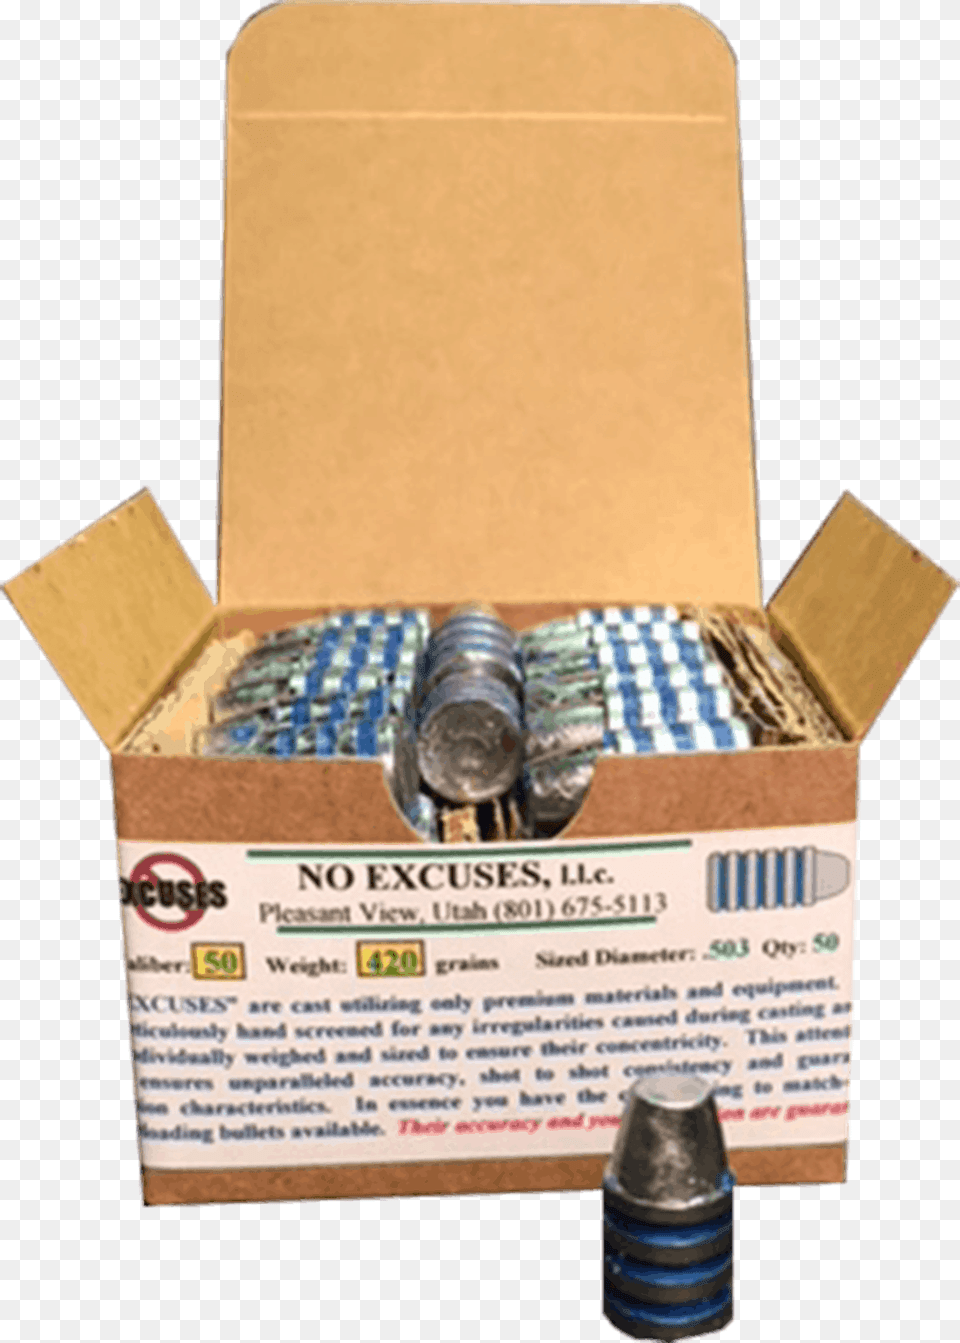 Camera Lens, Box, Bottle, Cardboard, Carton Png